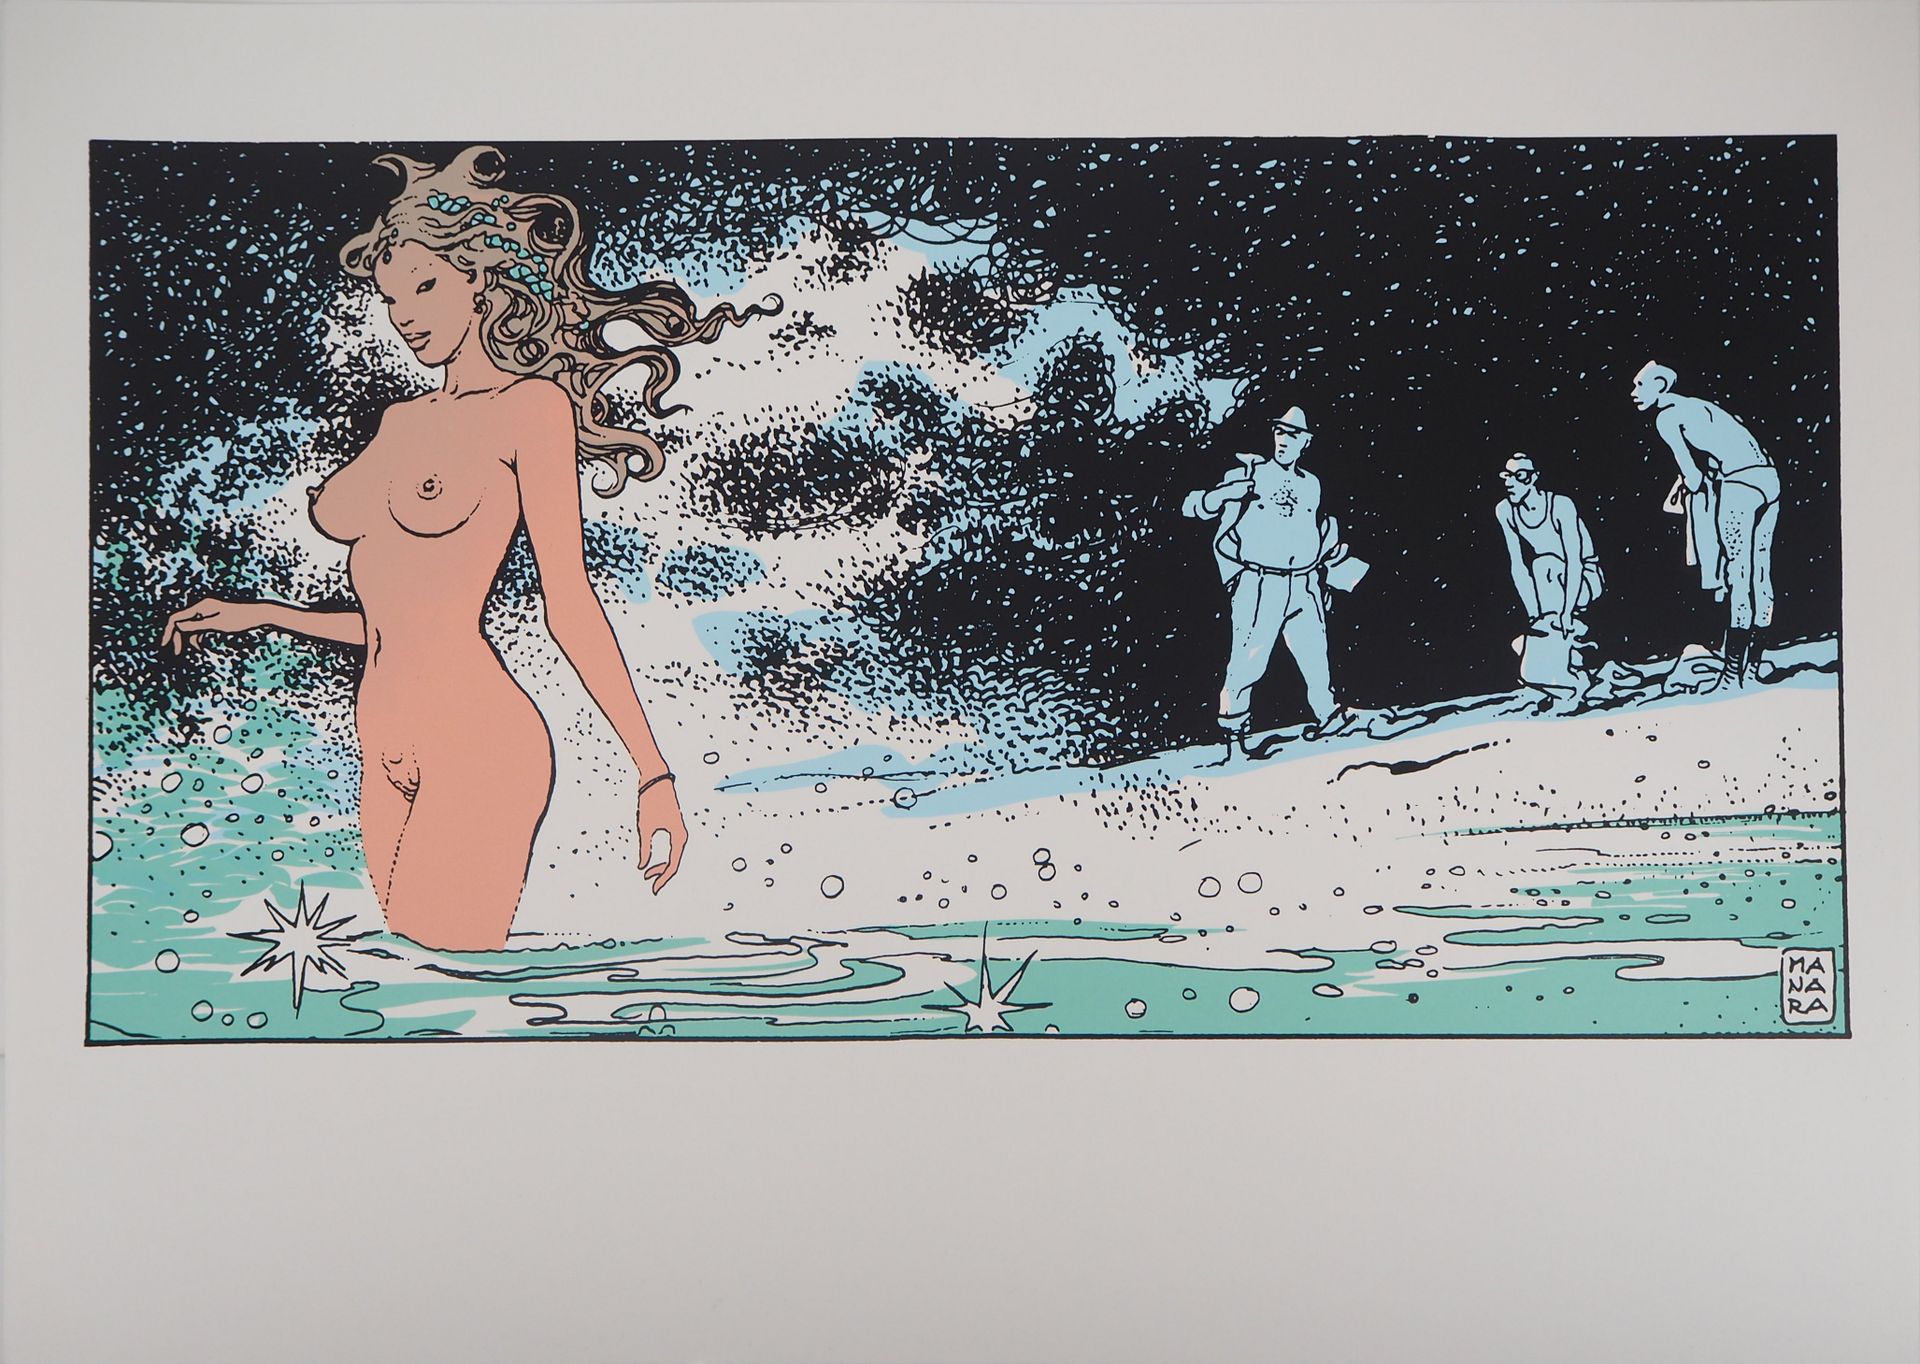 Milo Manara 米洛-马纳拉（1945-）

海浪中的美人鱼



原创彩色绢印画

板块中的签名

厚纸上 50 x 70 cm

状况极佳